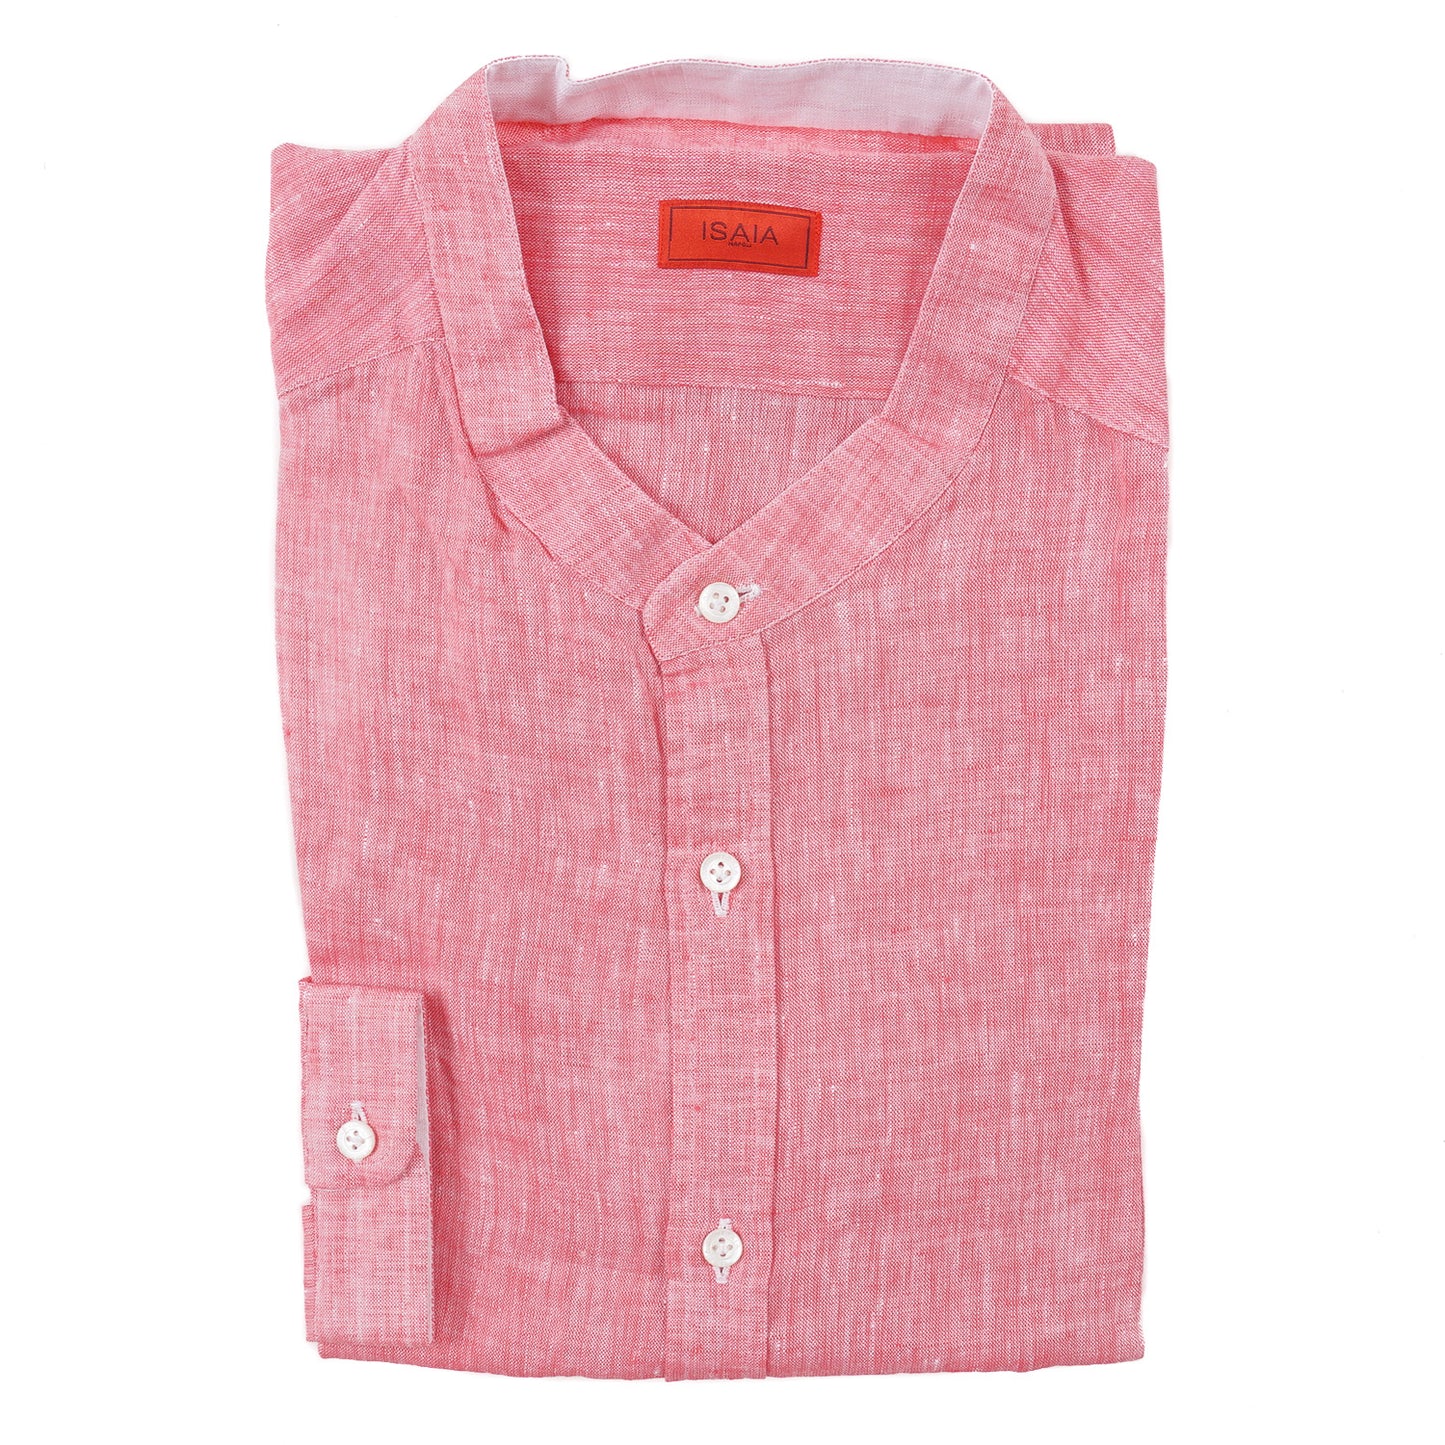 Isaia Woven Linen Shirt with Band Collar - Top Shelf Apparel